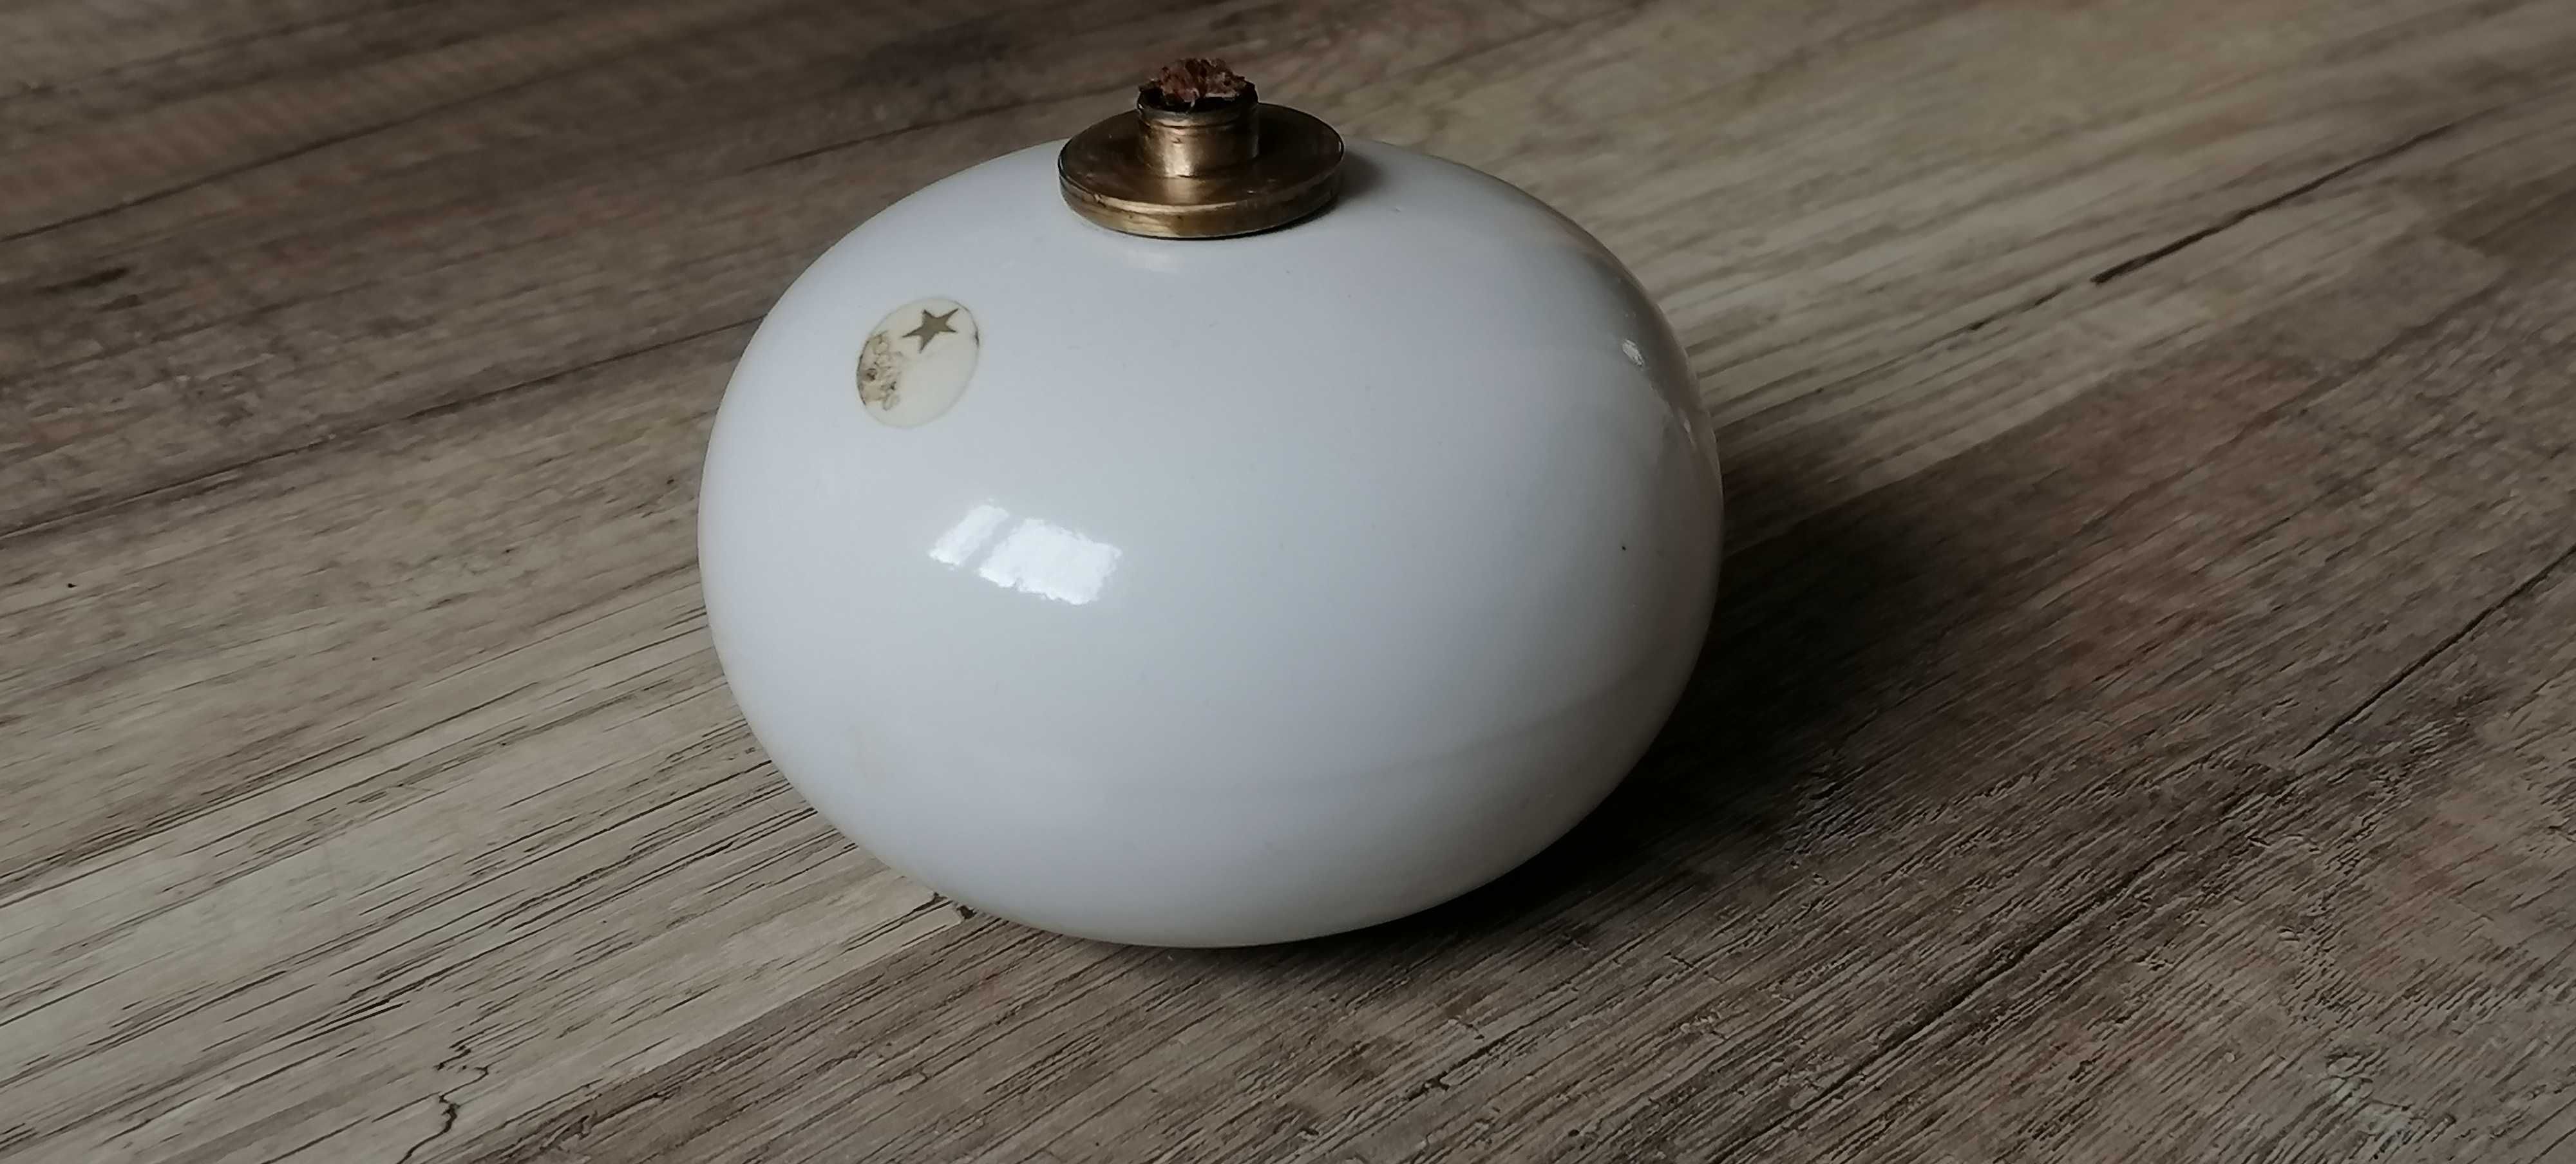 Ceramiczna lampka olejowa Hoganas Keramik.